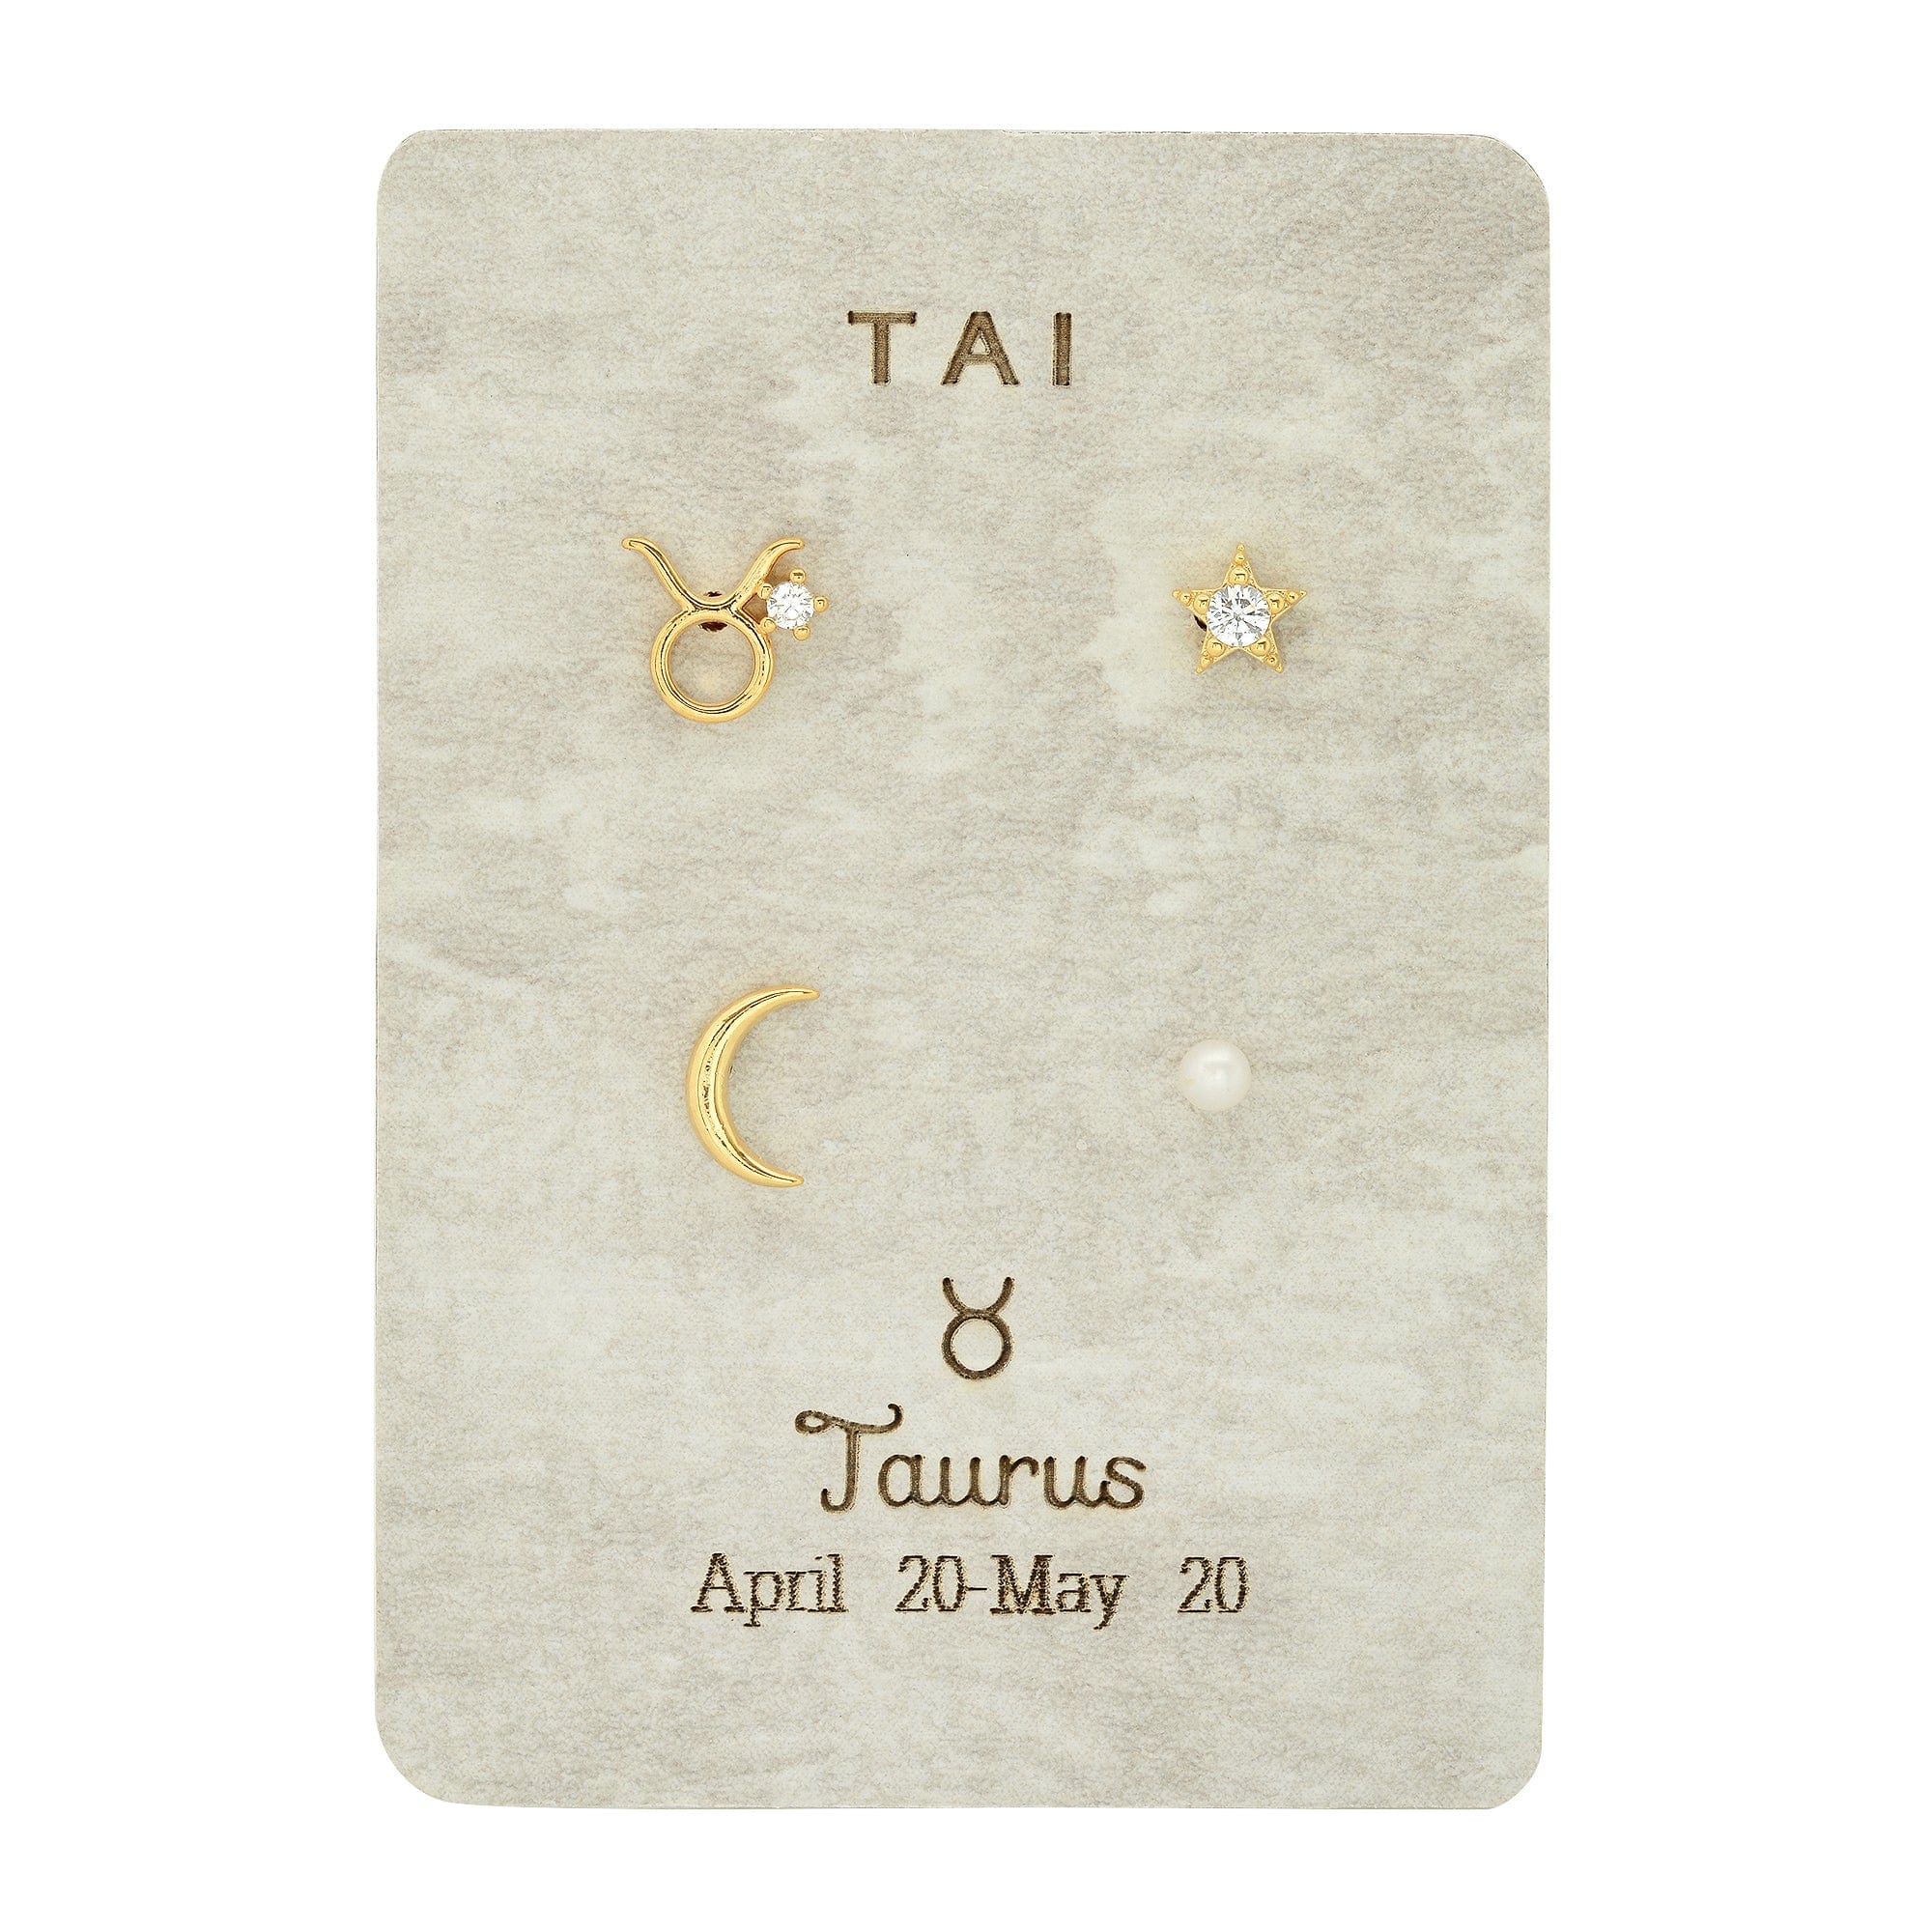 TAI JEWELRY Earrings Taurus Zodiac Celestial Stud Pack